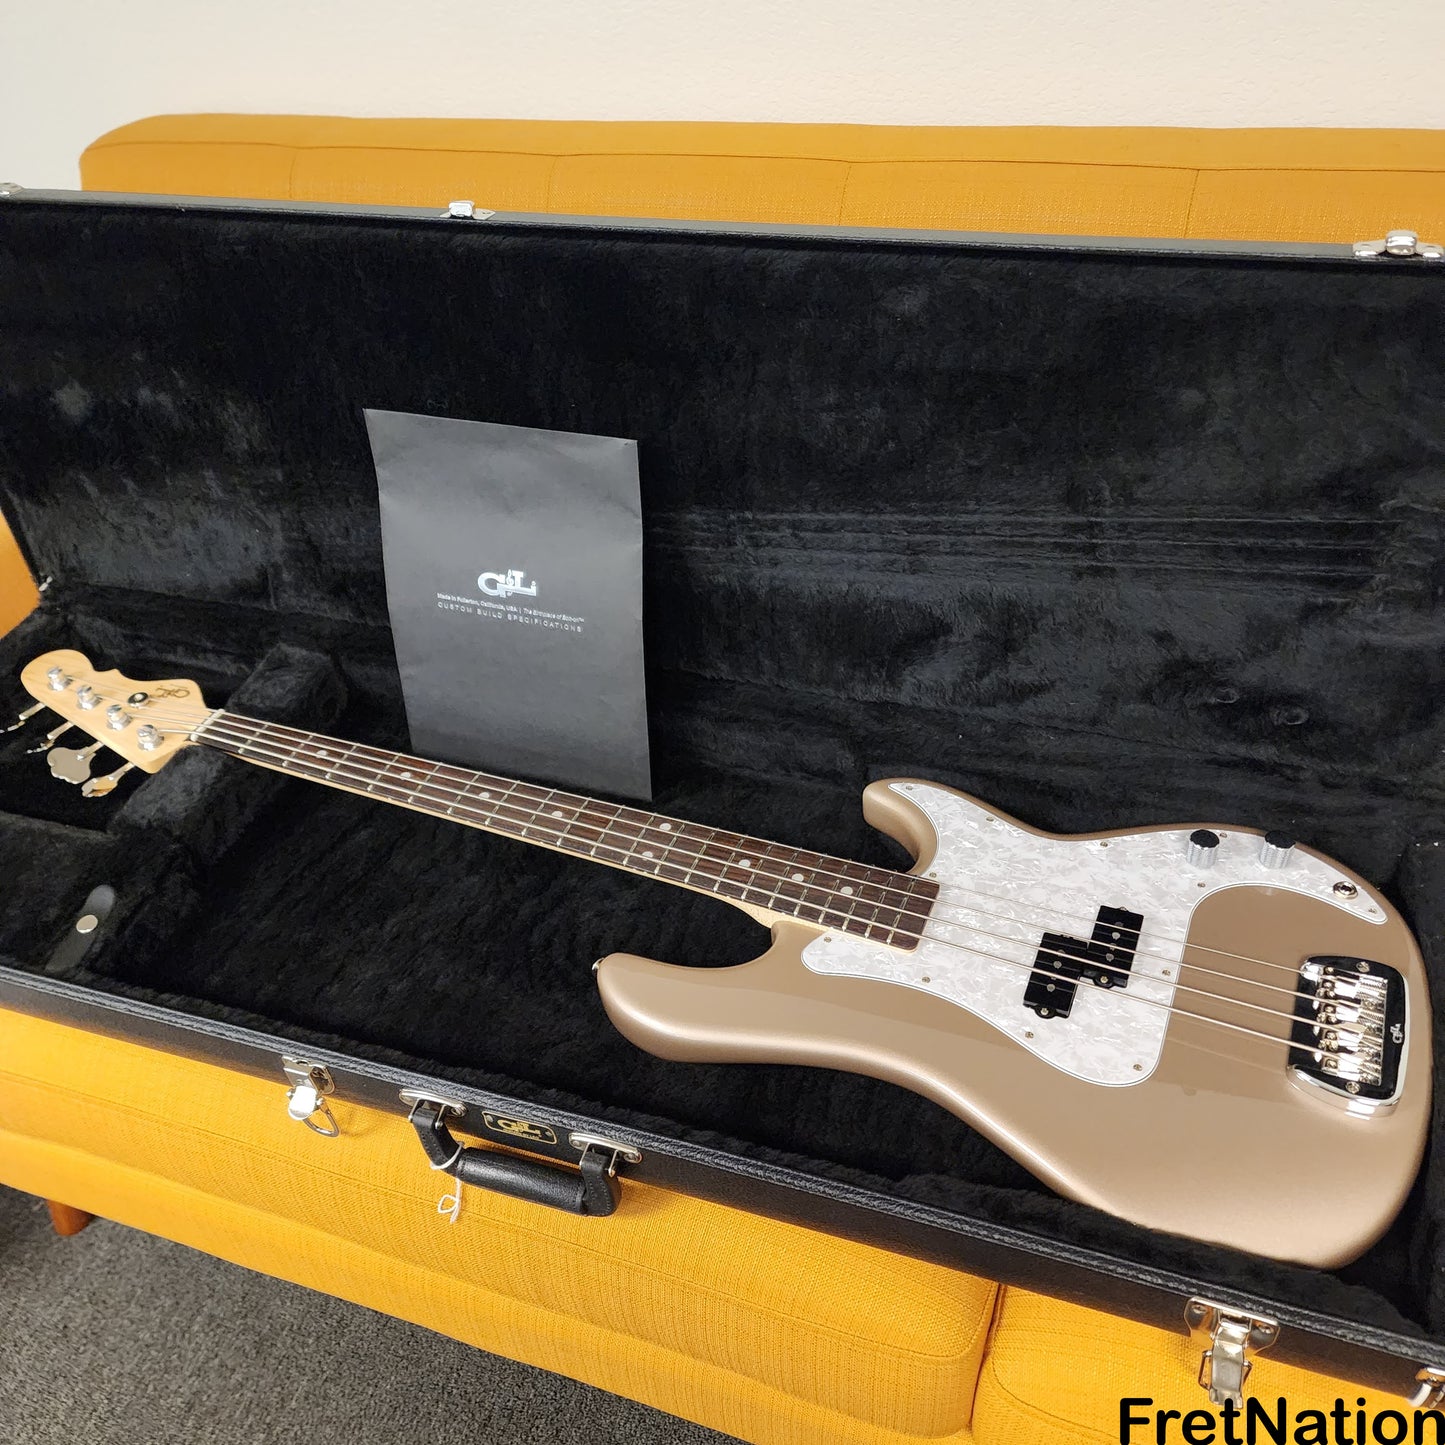 G&L G&L LB-100 Shoreline Gold 4-String Bass 9.30 Pounds CLF2207347